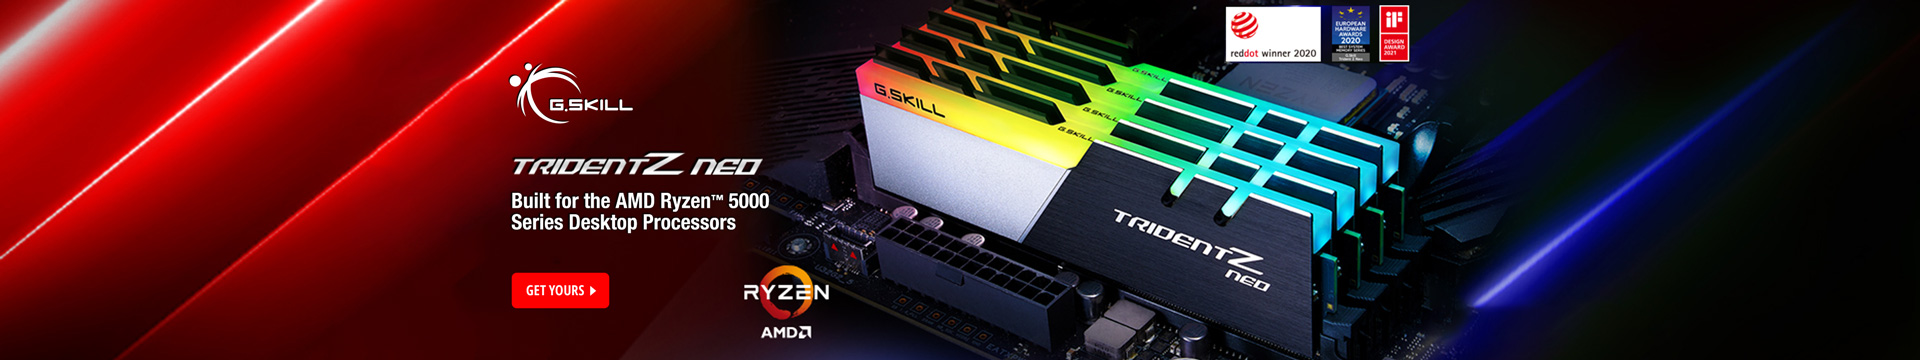 Built for the AMD Ryzen 5000 series desktop processors